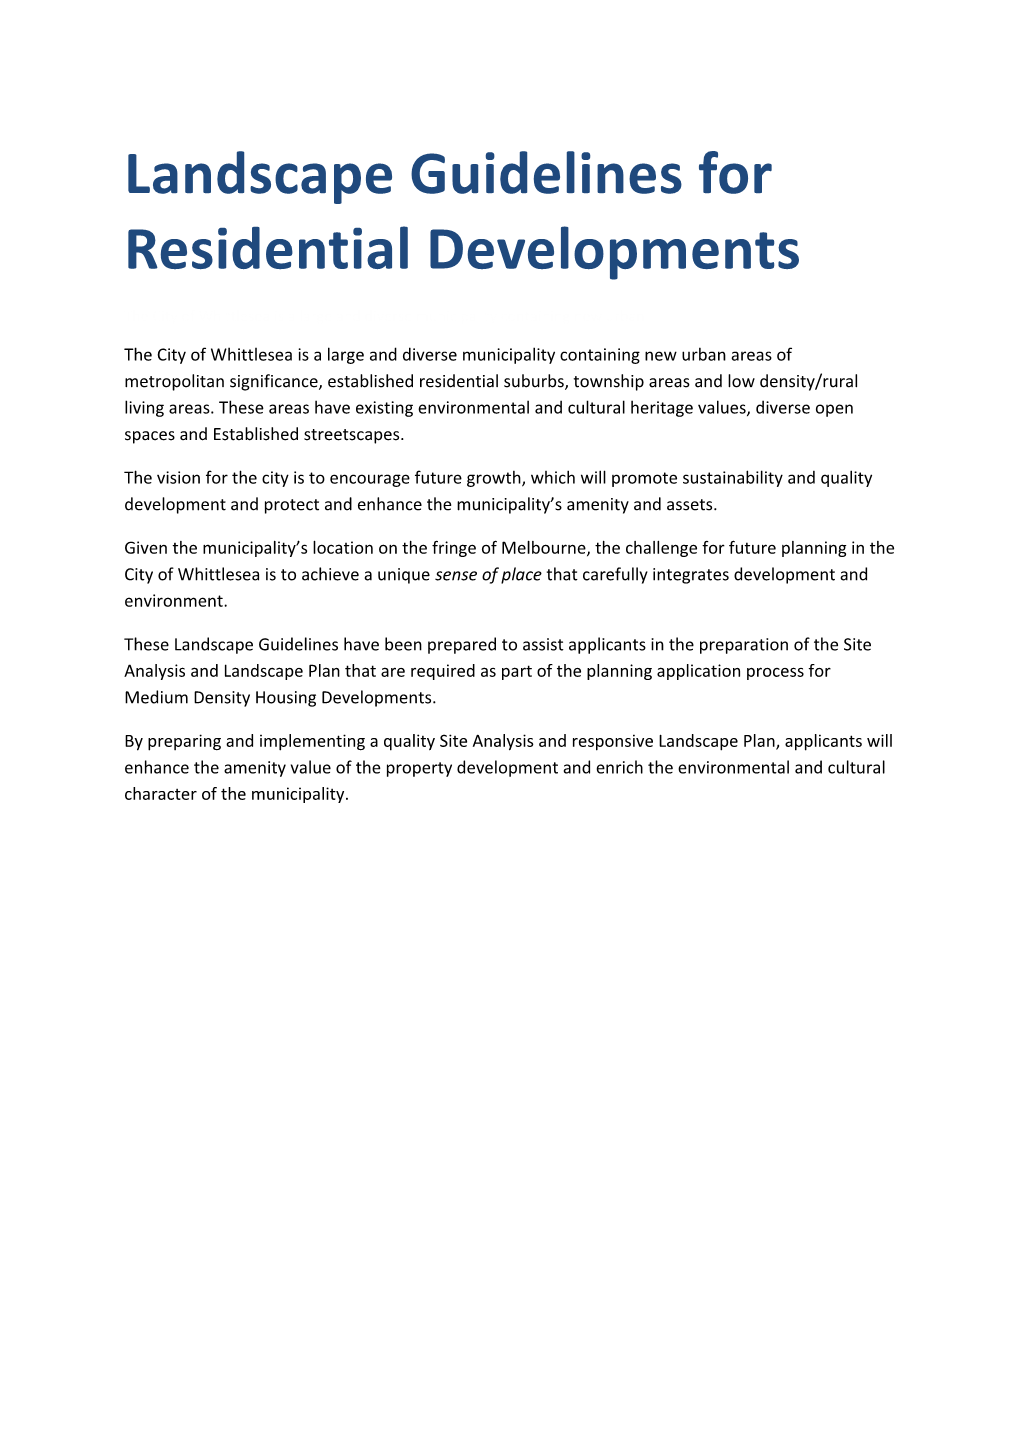 Landscape Guidelines for Residential Developments